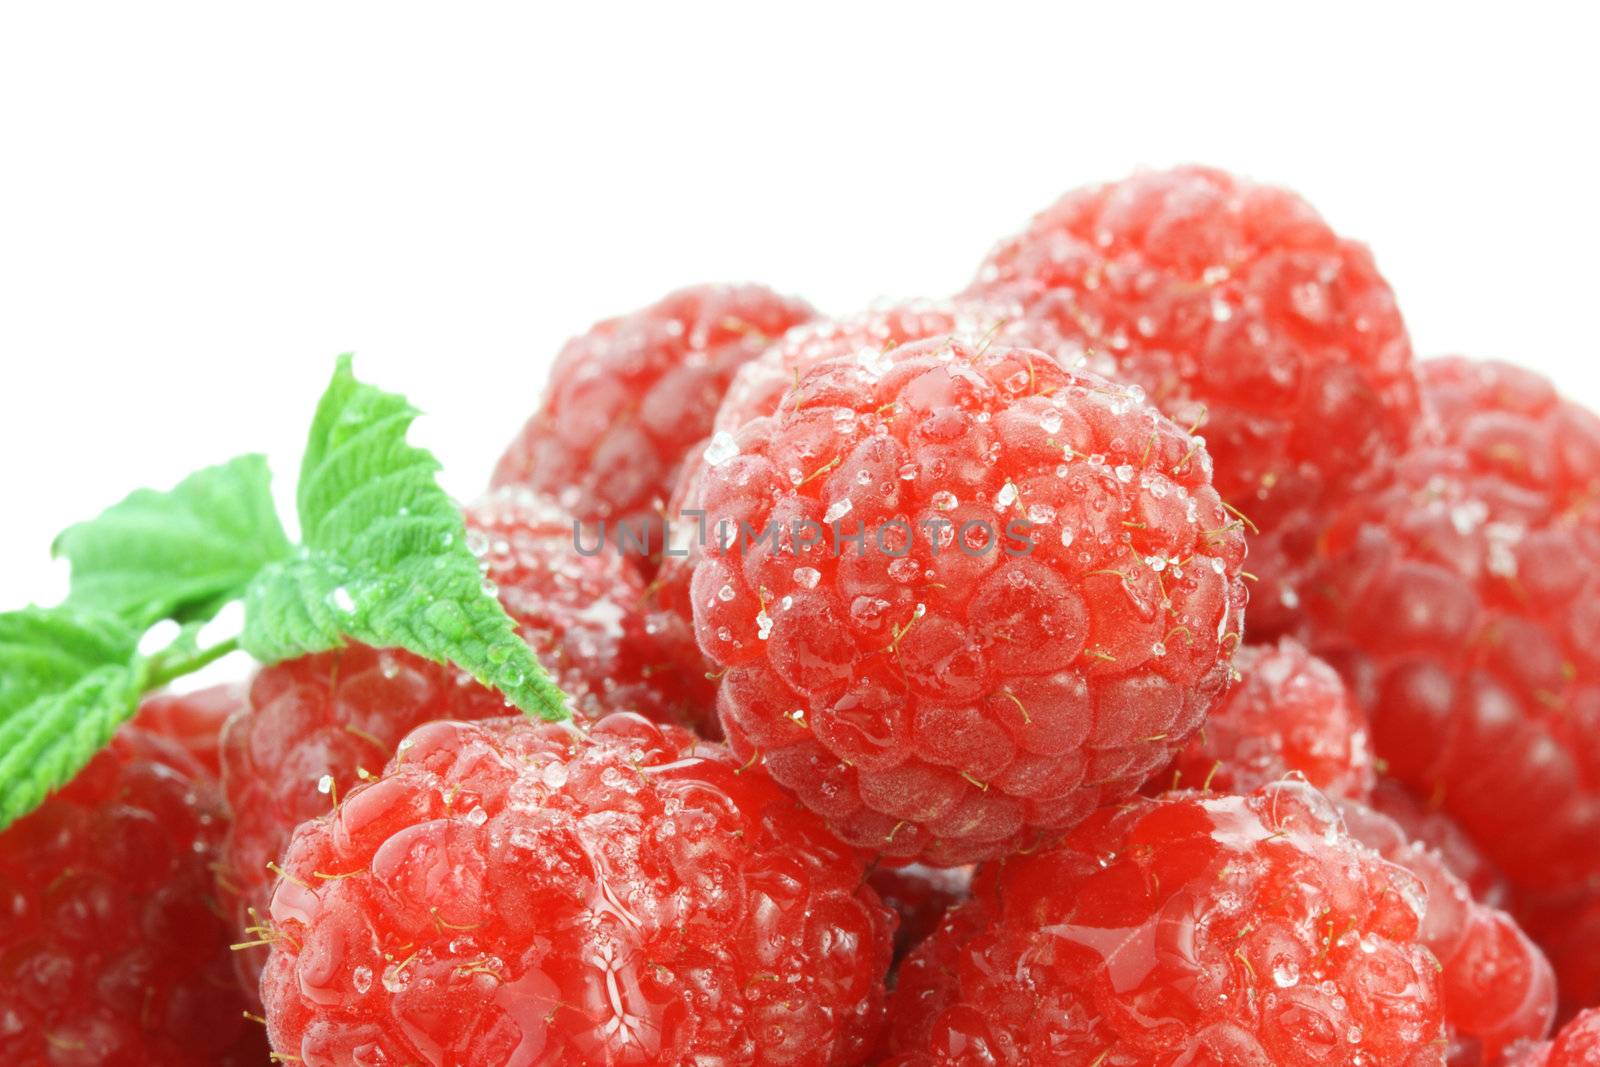 Raspberries and Sugar by StephanieFrey